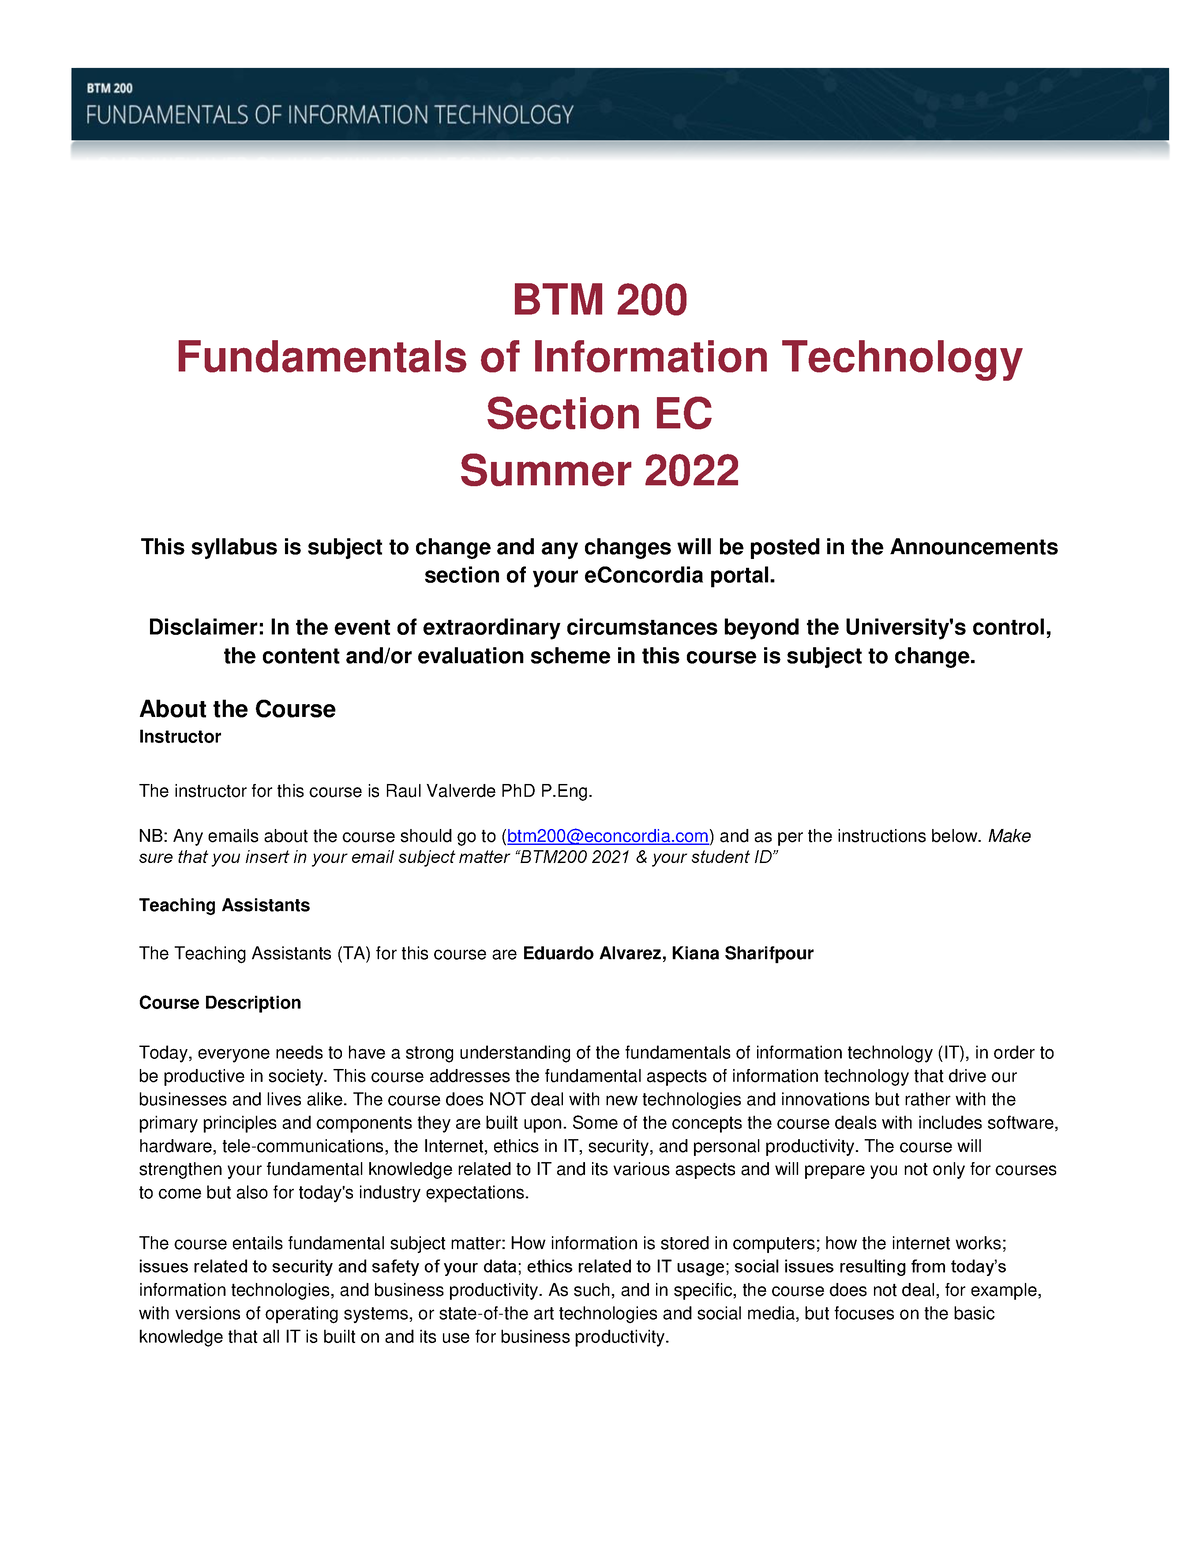 BTM course outline BTM 200 Fundamentals of Information Technology